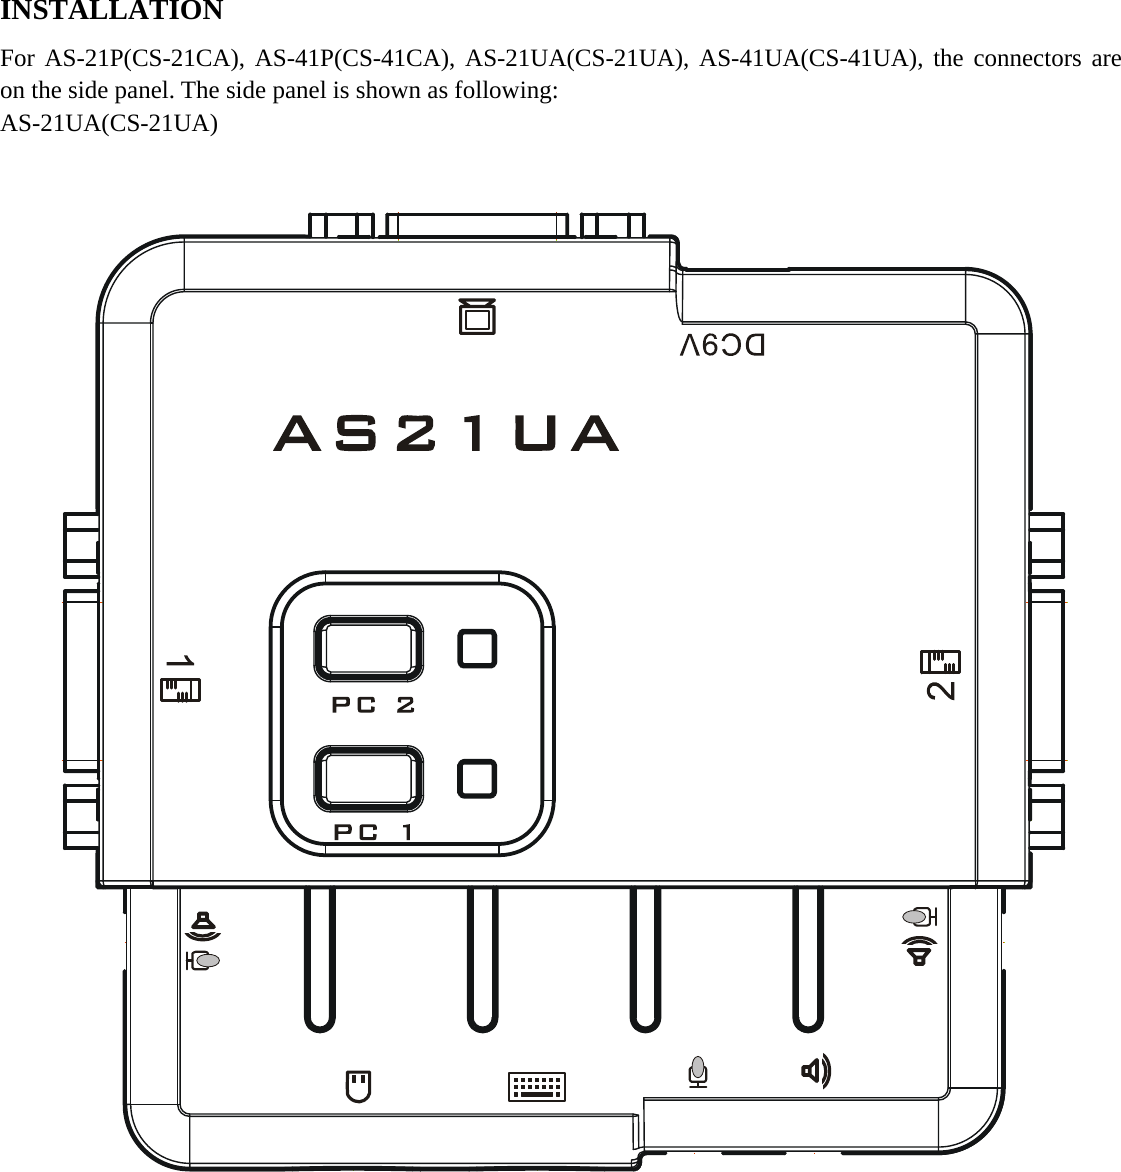   INSTALLATION For AS-21P(CS-21CA), AS-41P(CS-41CA), AS-21UA(CS-21UA), AS-41UA(CS-41UA), the connectors are on the side panel. The side panel is shown as following: AS-21UA(CS-21UA)         